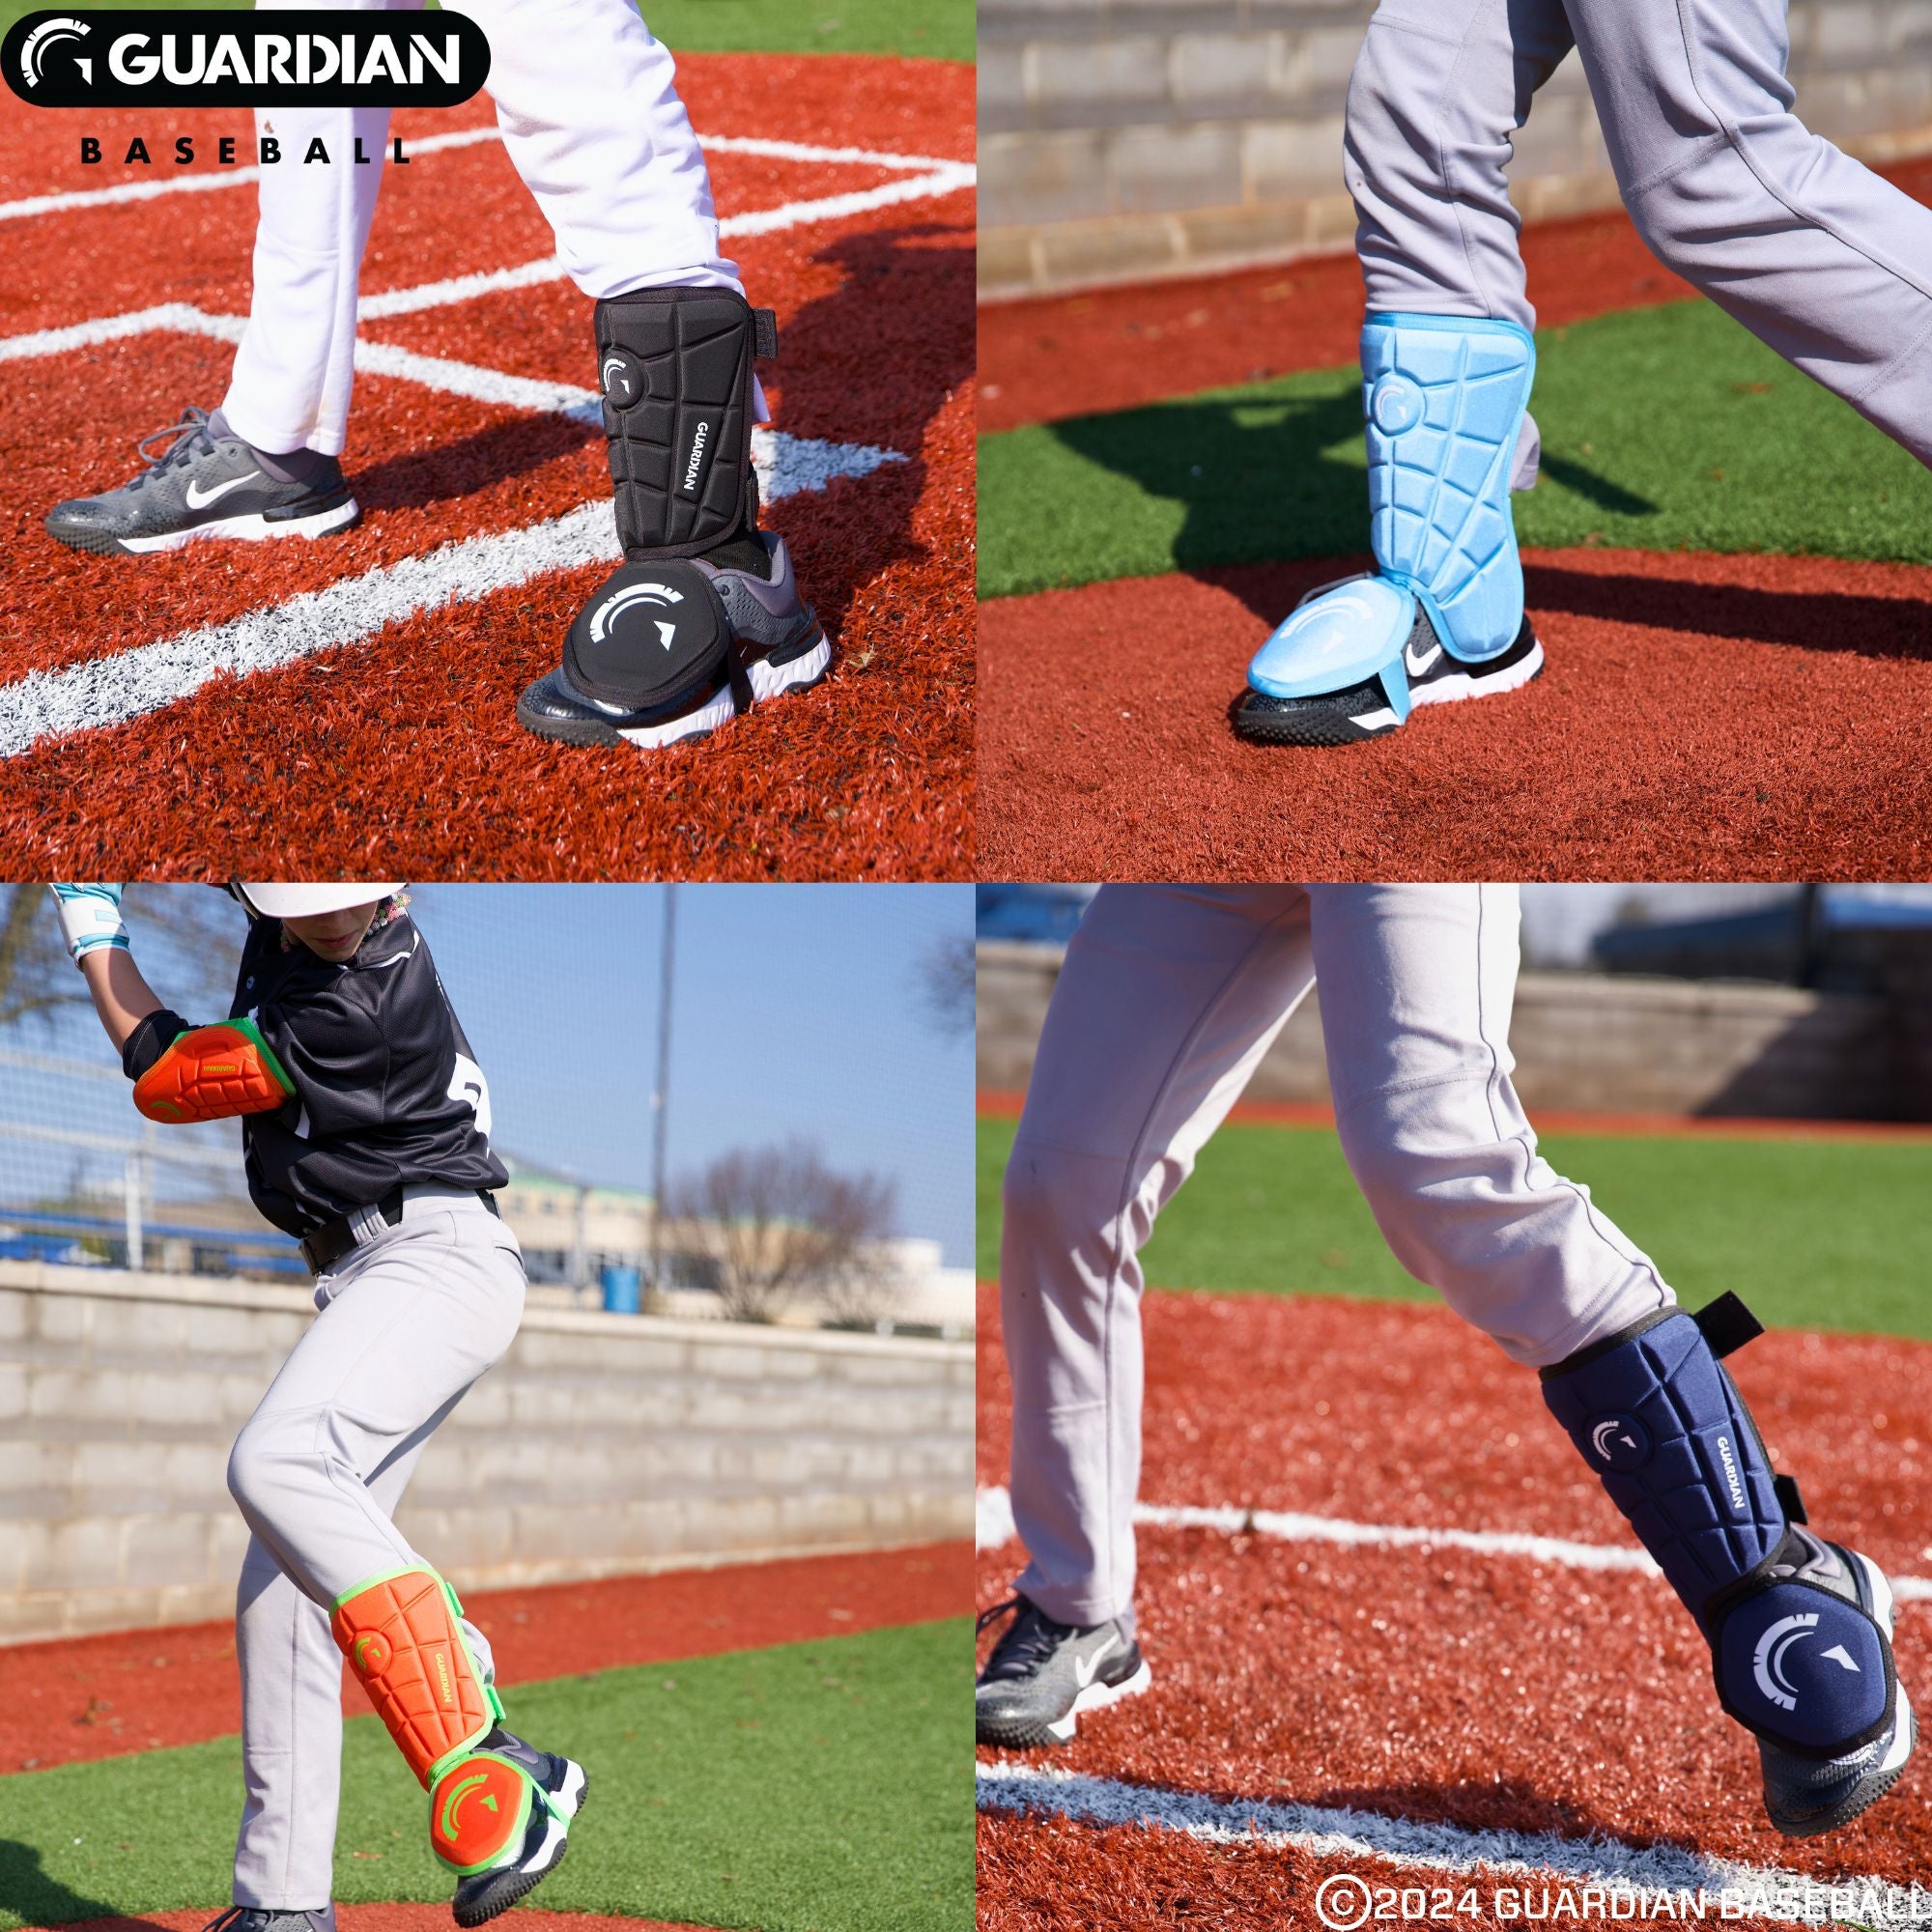 Guardian Baseball Batters Protective Batting Leg Guard Adjustable, Youth  and Adult, Navy/White